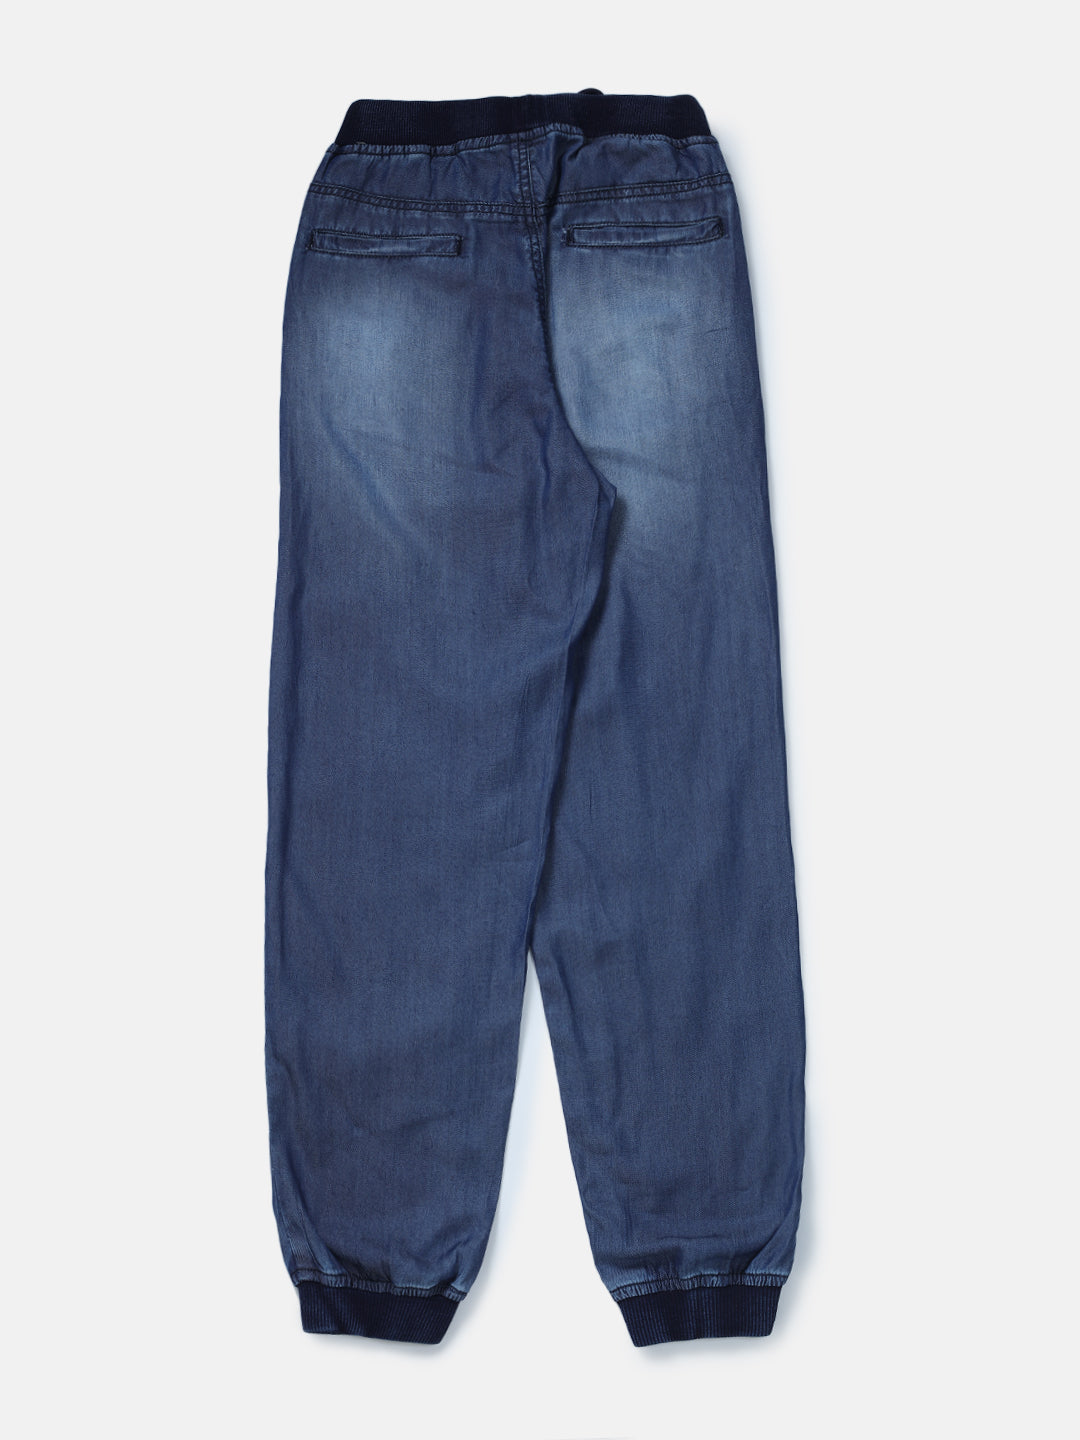 Boys Blue Solid Denim Jeans